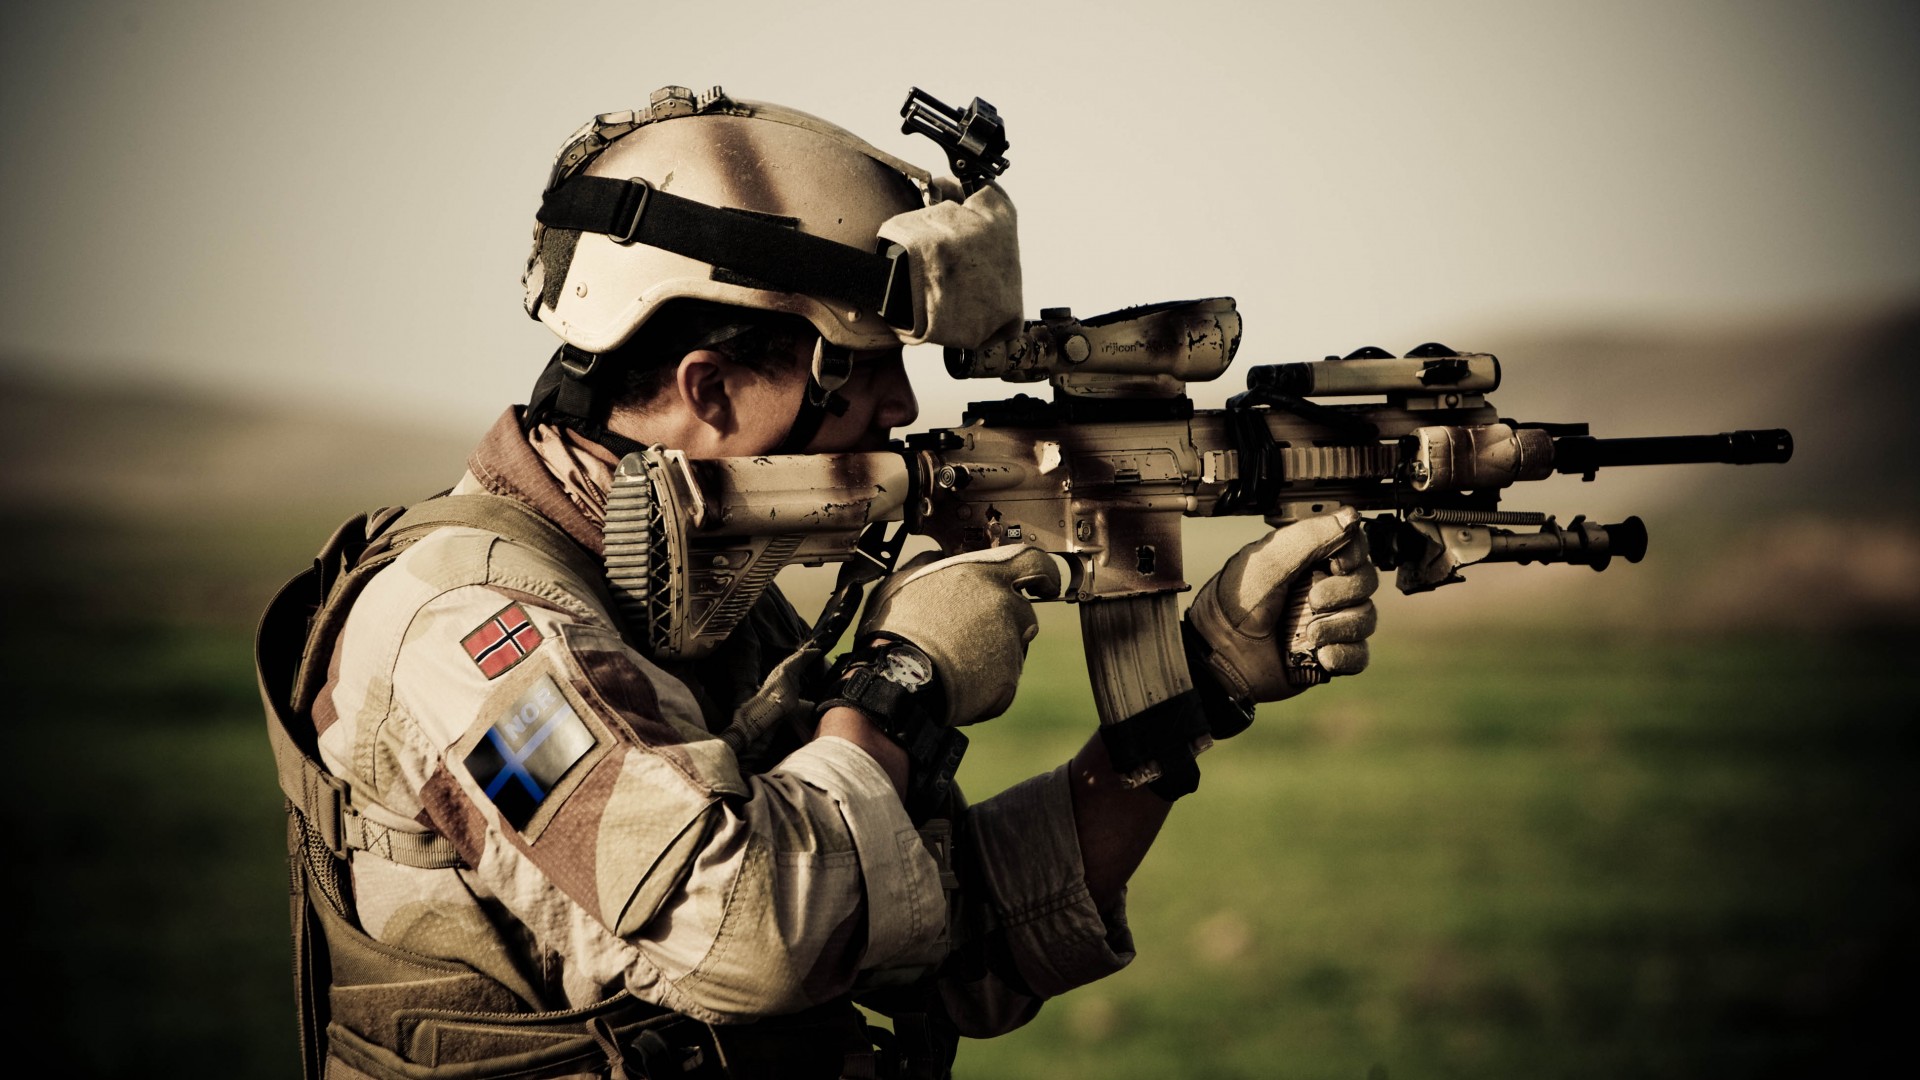 автомат, HK416, Армия Норвегии, HK416, soldier, Heckler & Koch, Norwegian Army, assault rifle, camo, scope (horizontal)